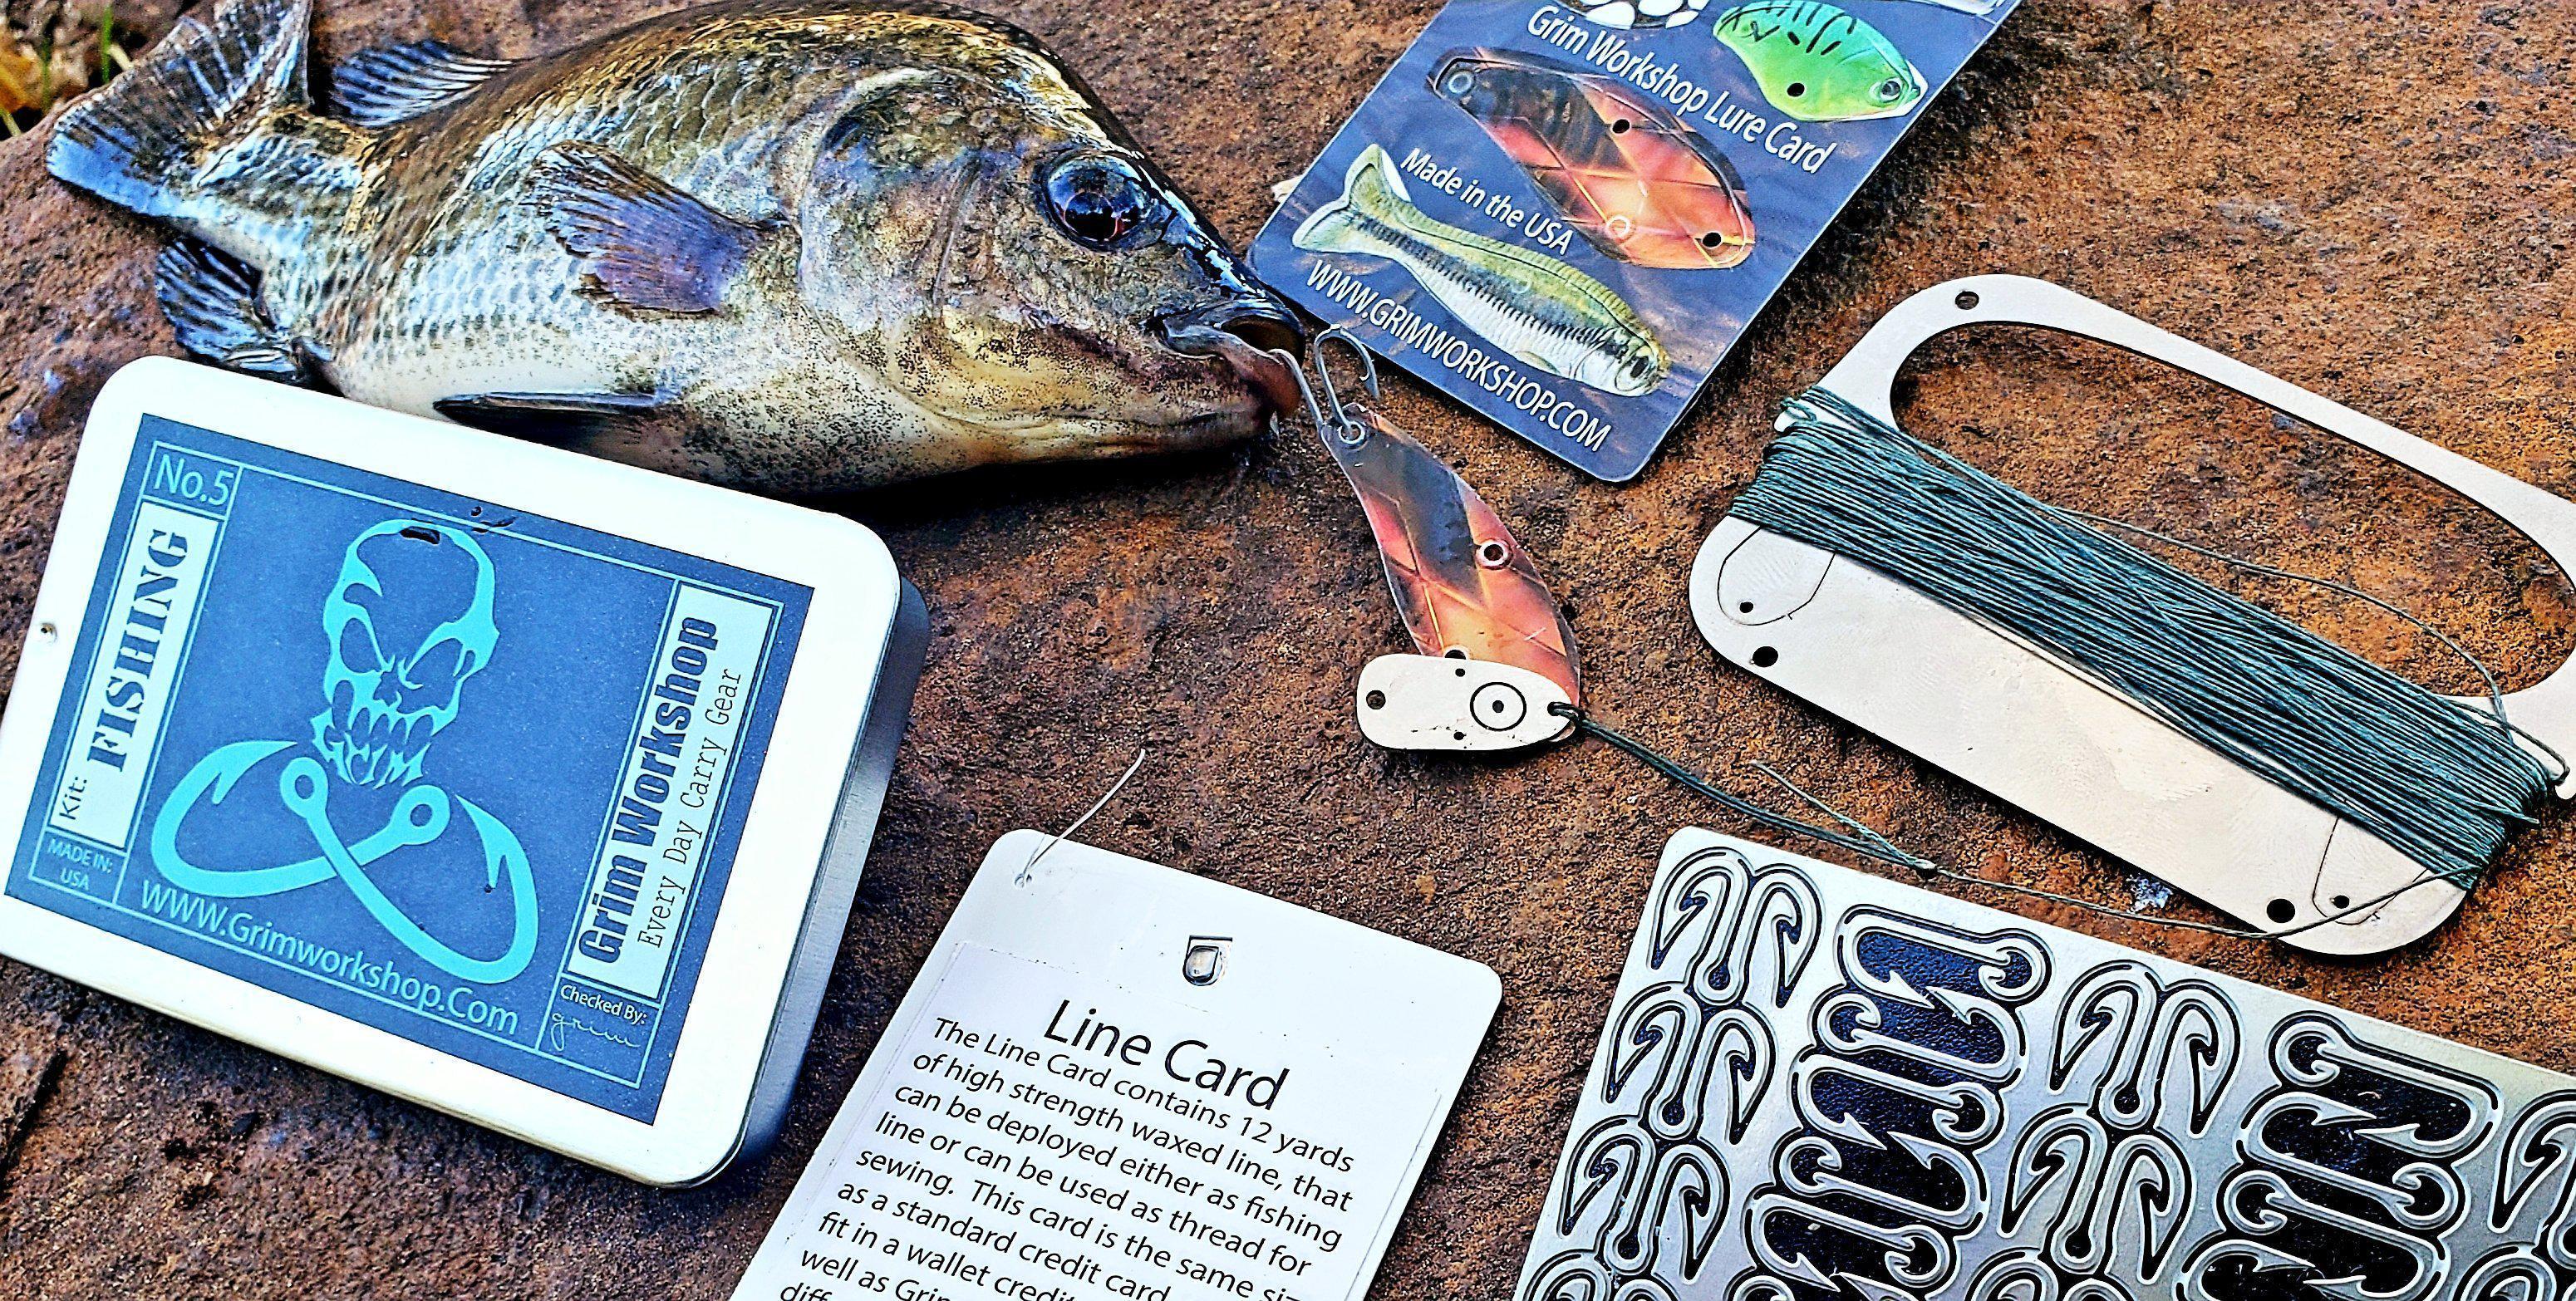 Hand Caster Fishing Card 2 finger version-Grimworkshop-bugoutbag-bushcraft-edc-gear-edctool-everydaycarry-survivalcard-survivalkit-wilderness-prepping-toolkit